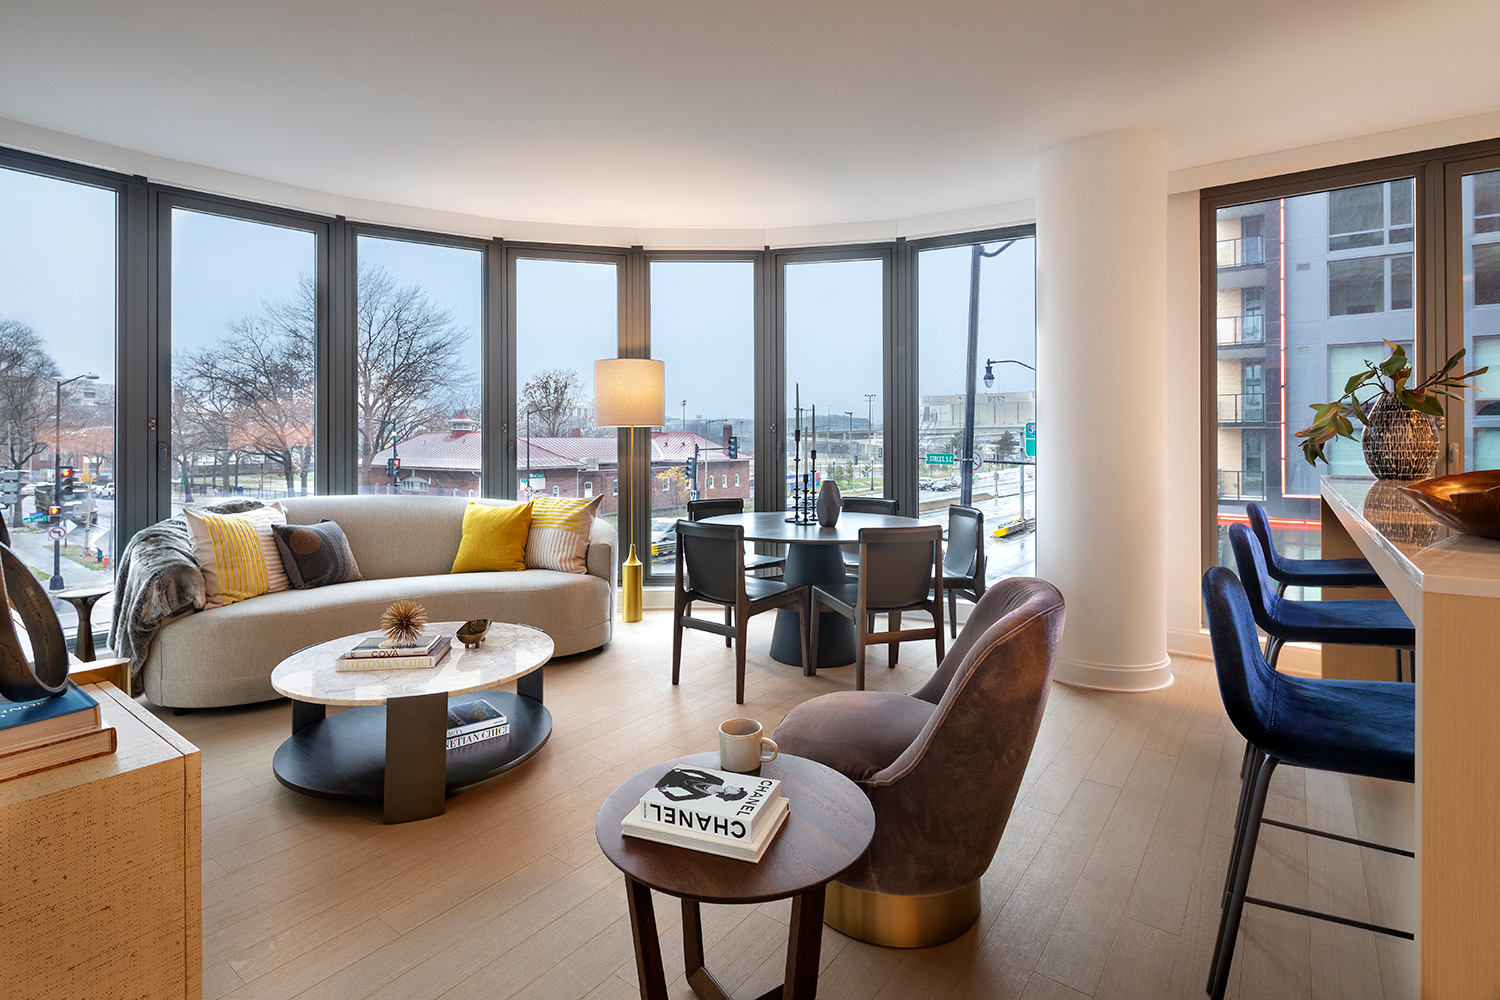 Accesorios Calumnia interior 10K Luxury Rental Apartments in Capitol Riverfront, Washington DC